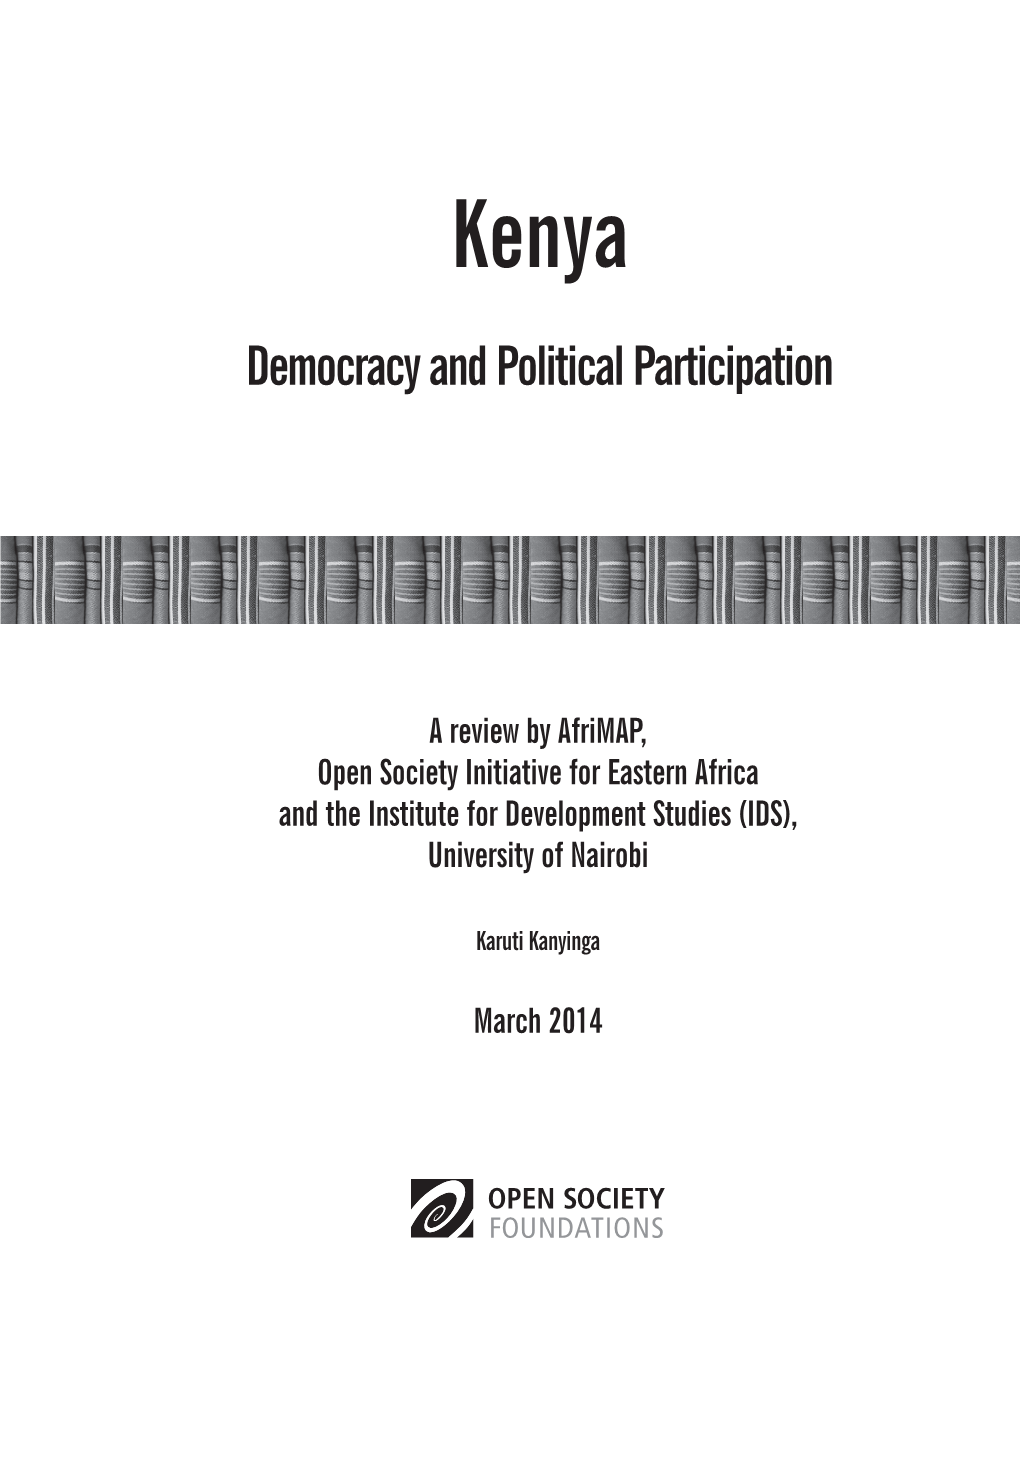 Kenya: Democracy and Political Participation